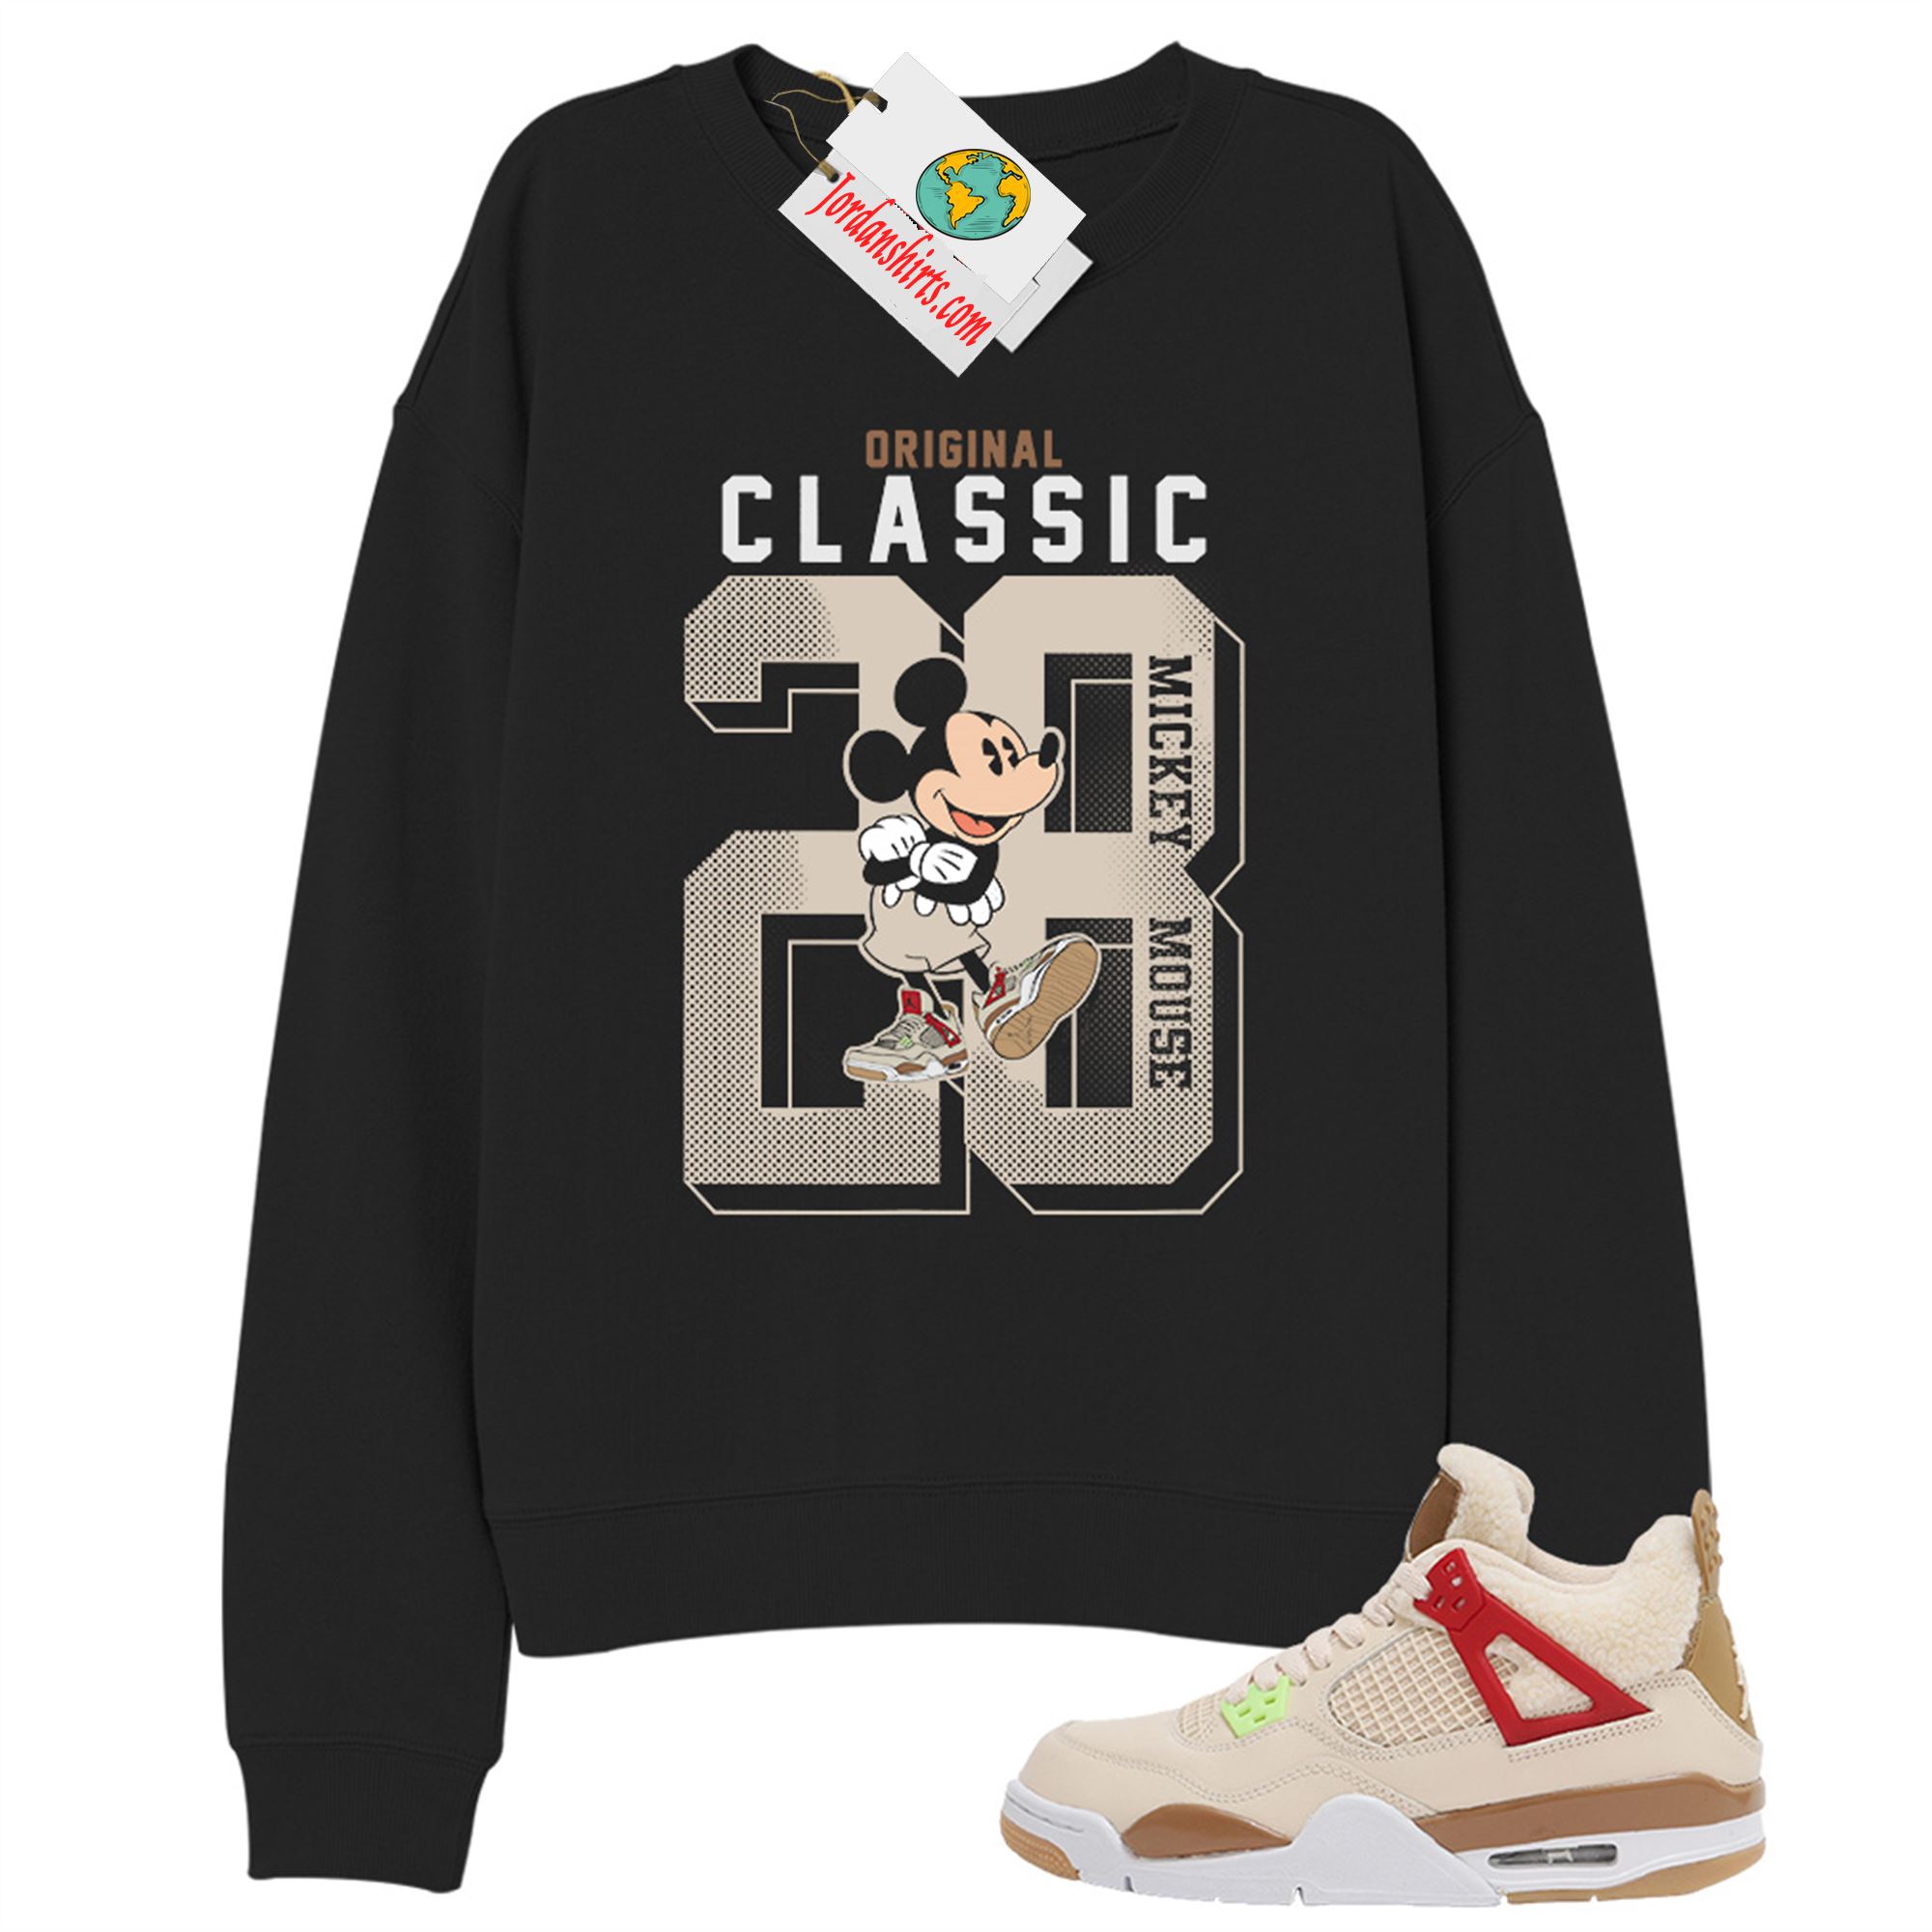 Jordan 4 Sweatshirt, Disney Mickey Mouse Classic 28 Black Sweatshirt Air Jordan 4 Wild Thing 4s Size Up To 5xl